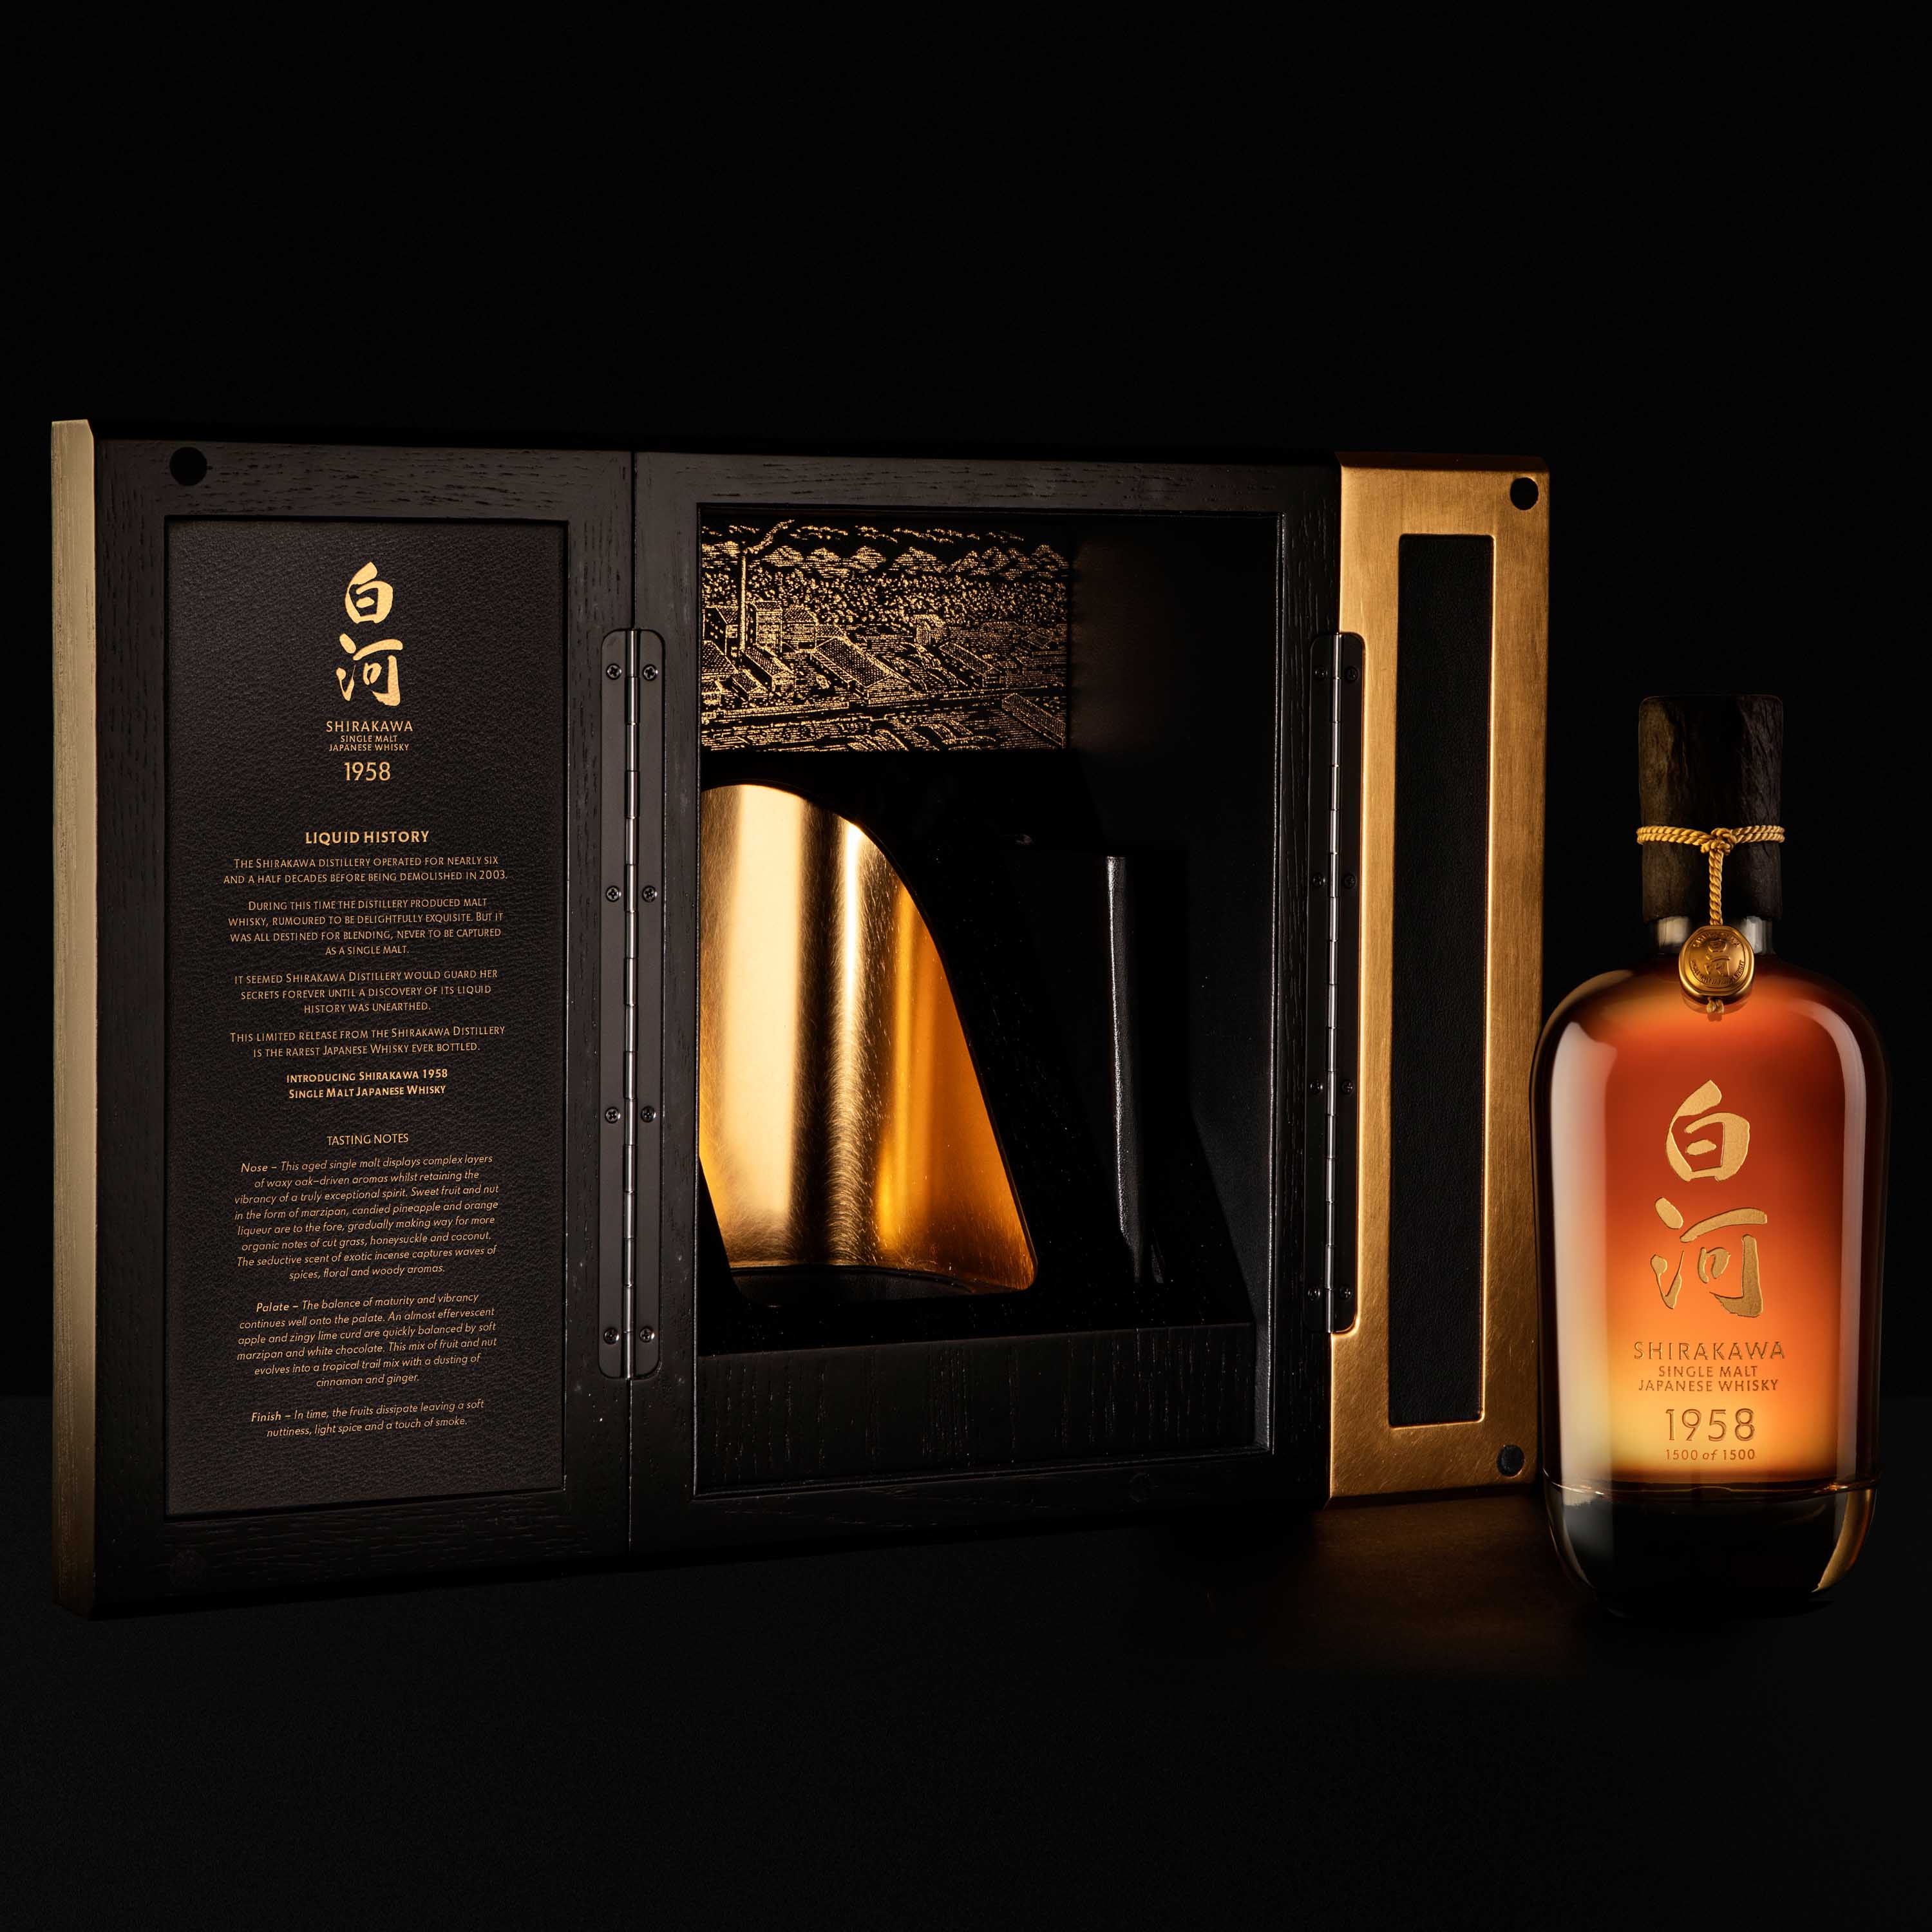 Shirakawa 1958 Liquid History, the world's rarest Japanese whisky